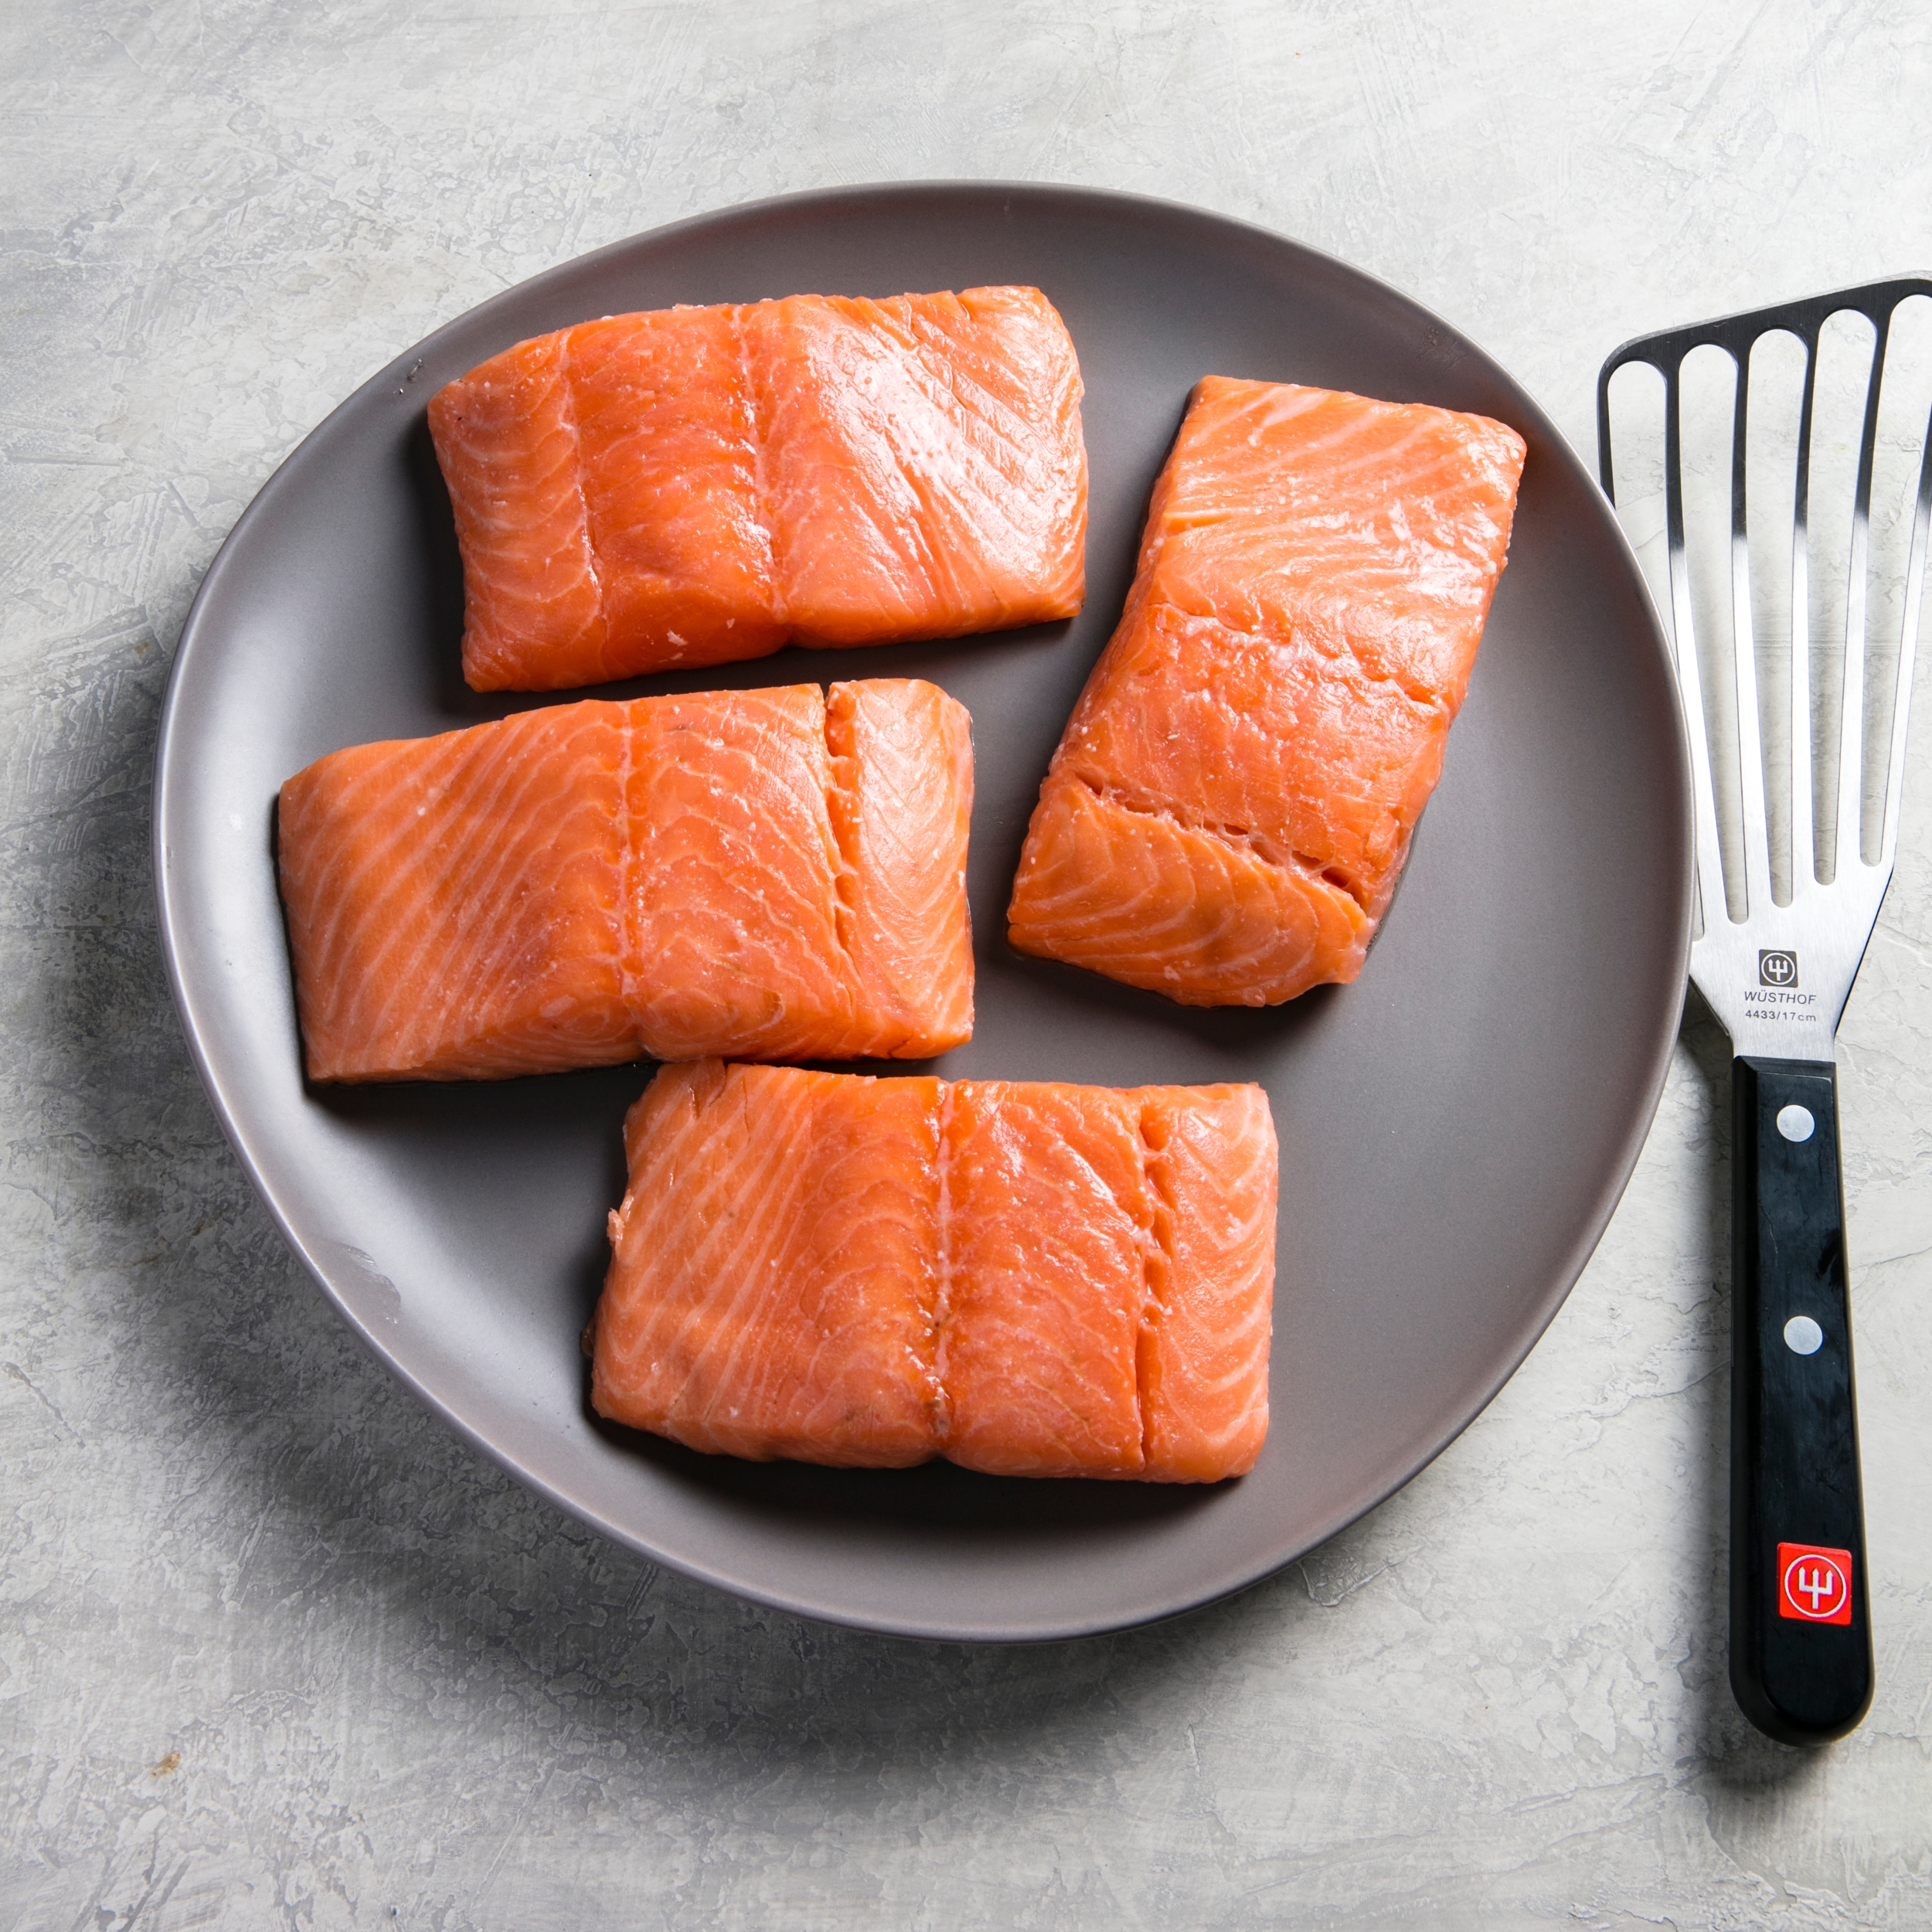 Vide Poached Salmon | America's Test Kitchen Recipe